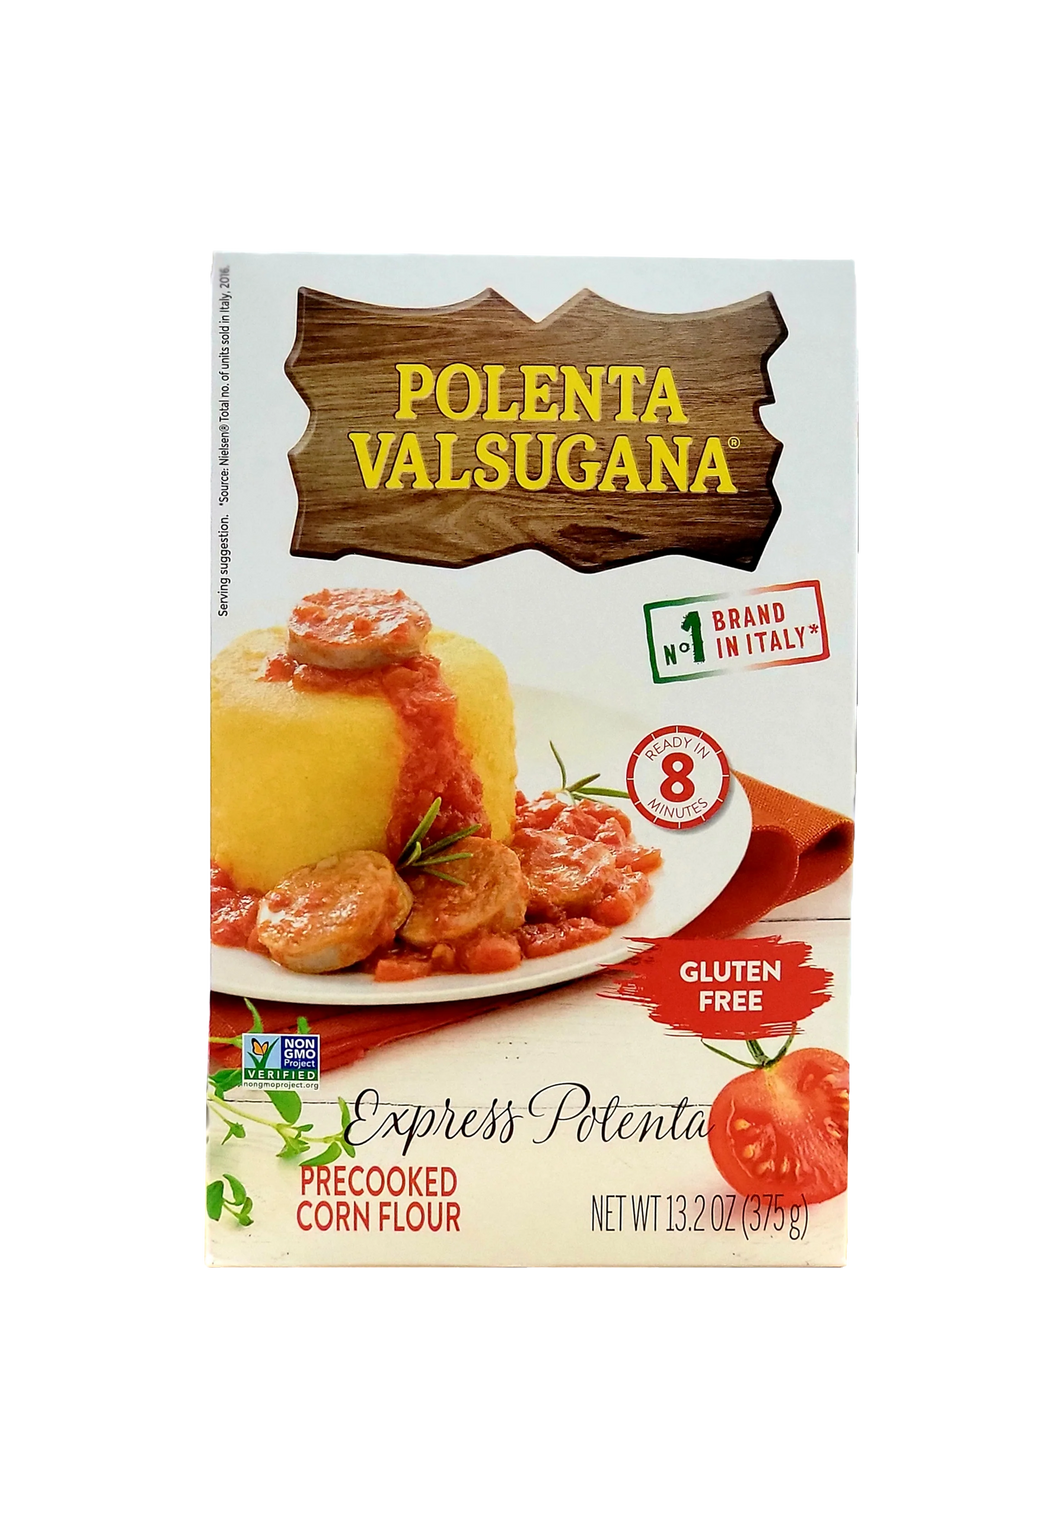 Polenta Valsugana Precooked Corn Flour 375g